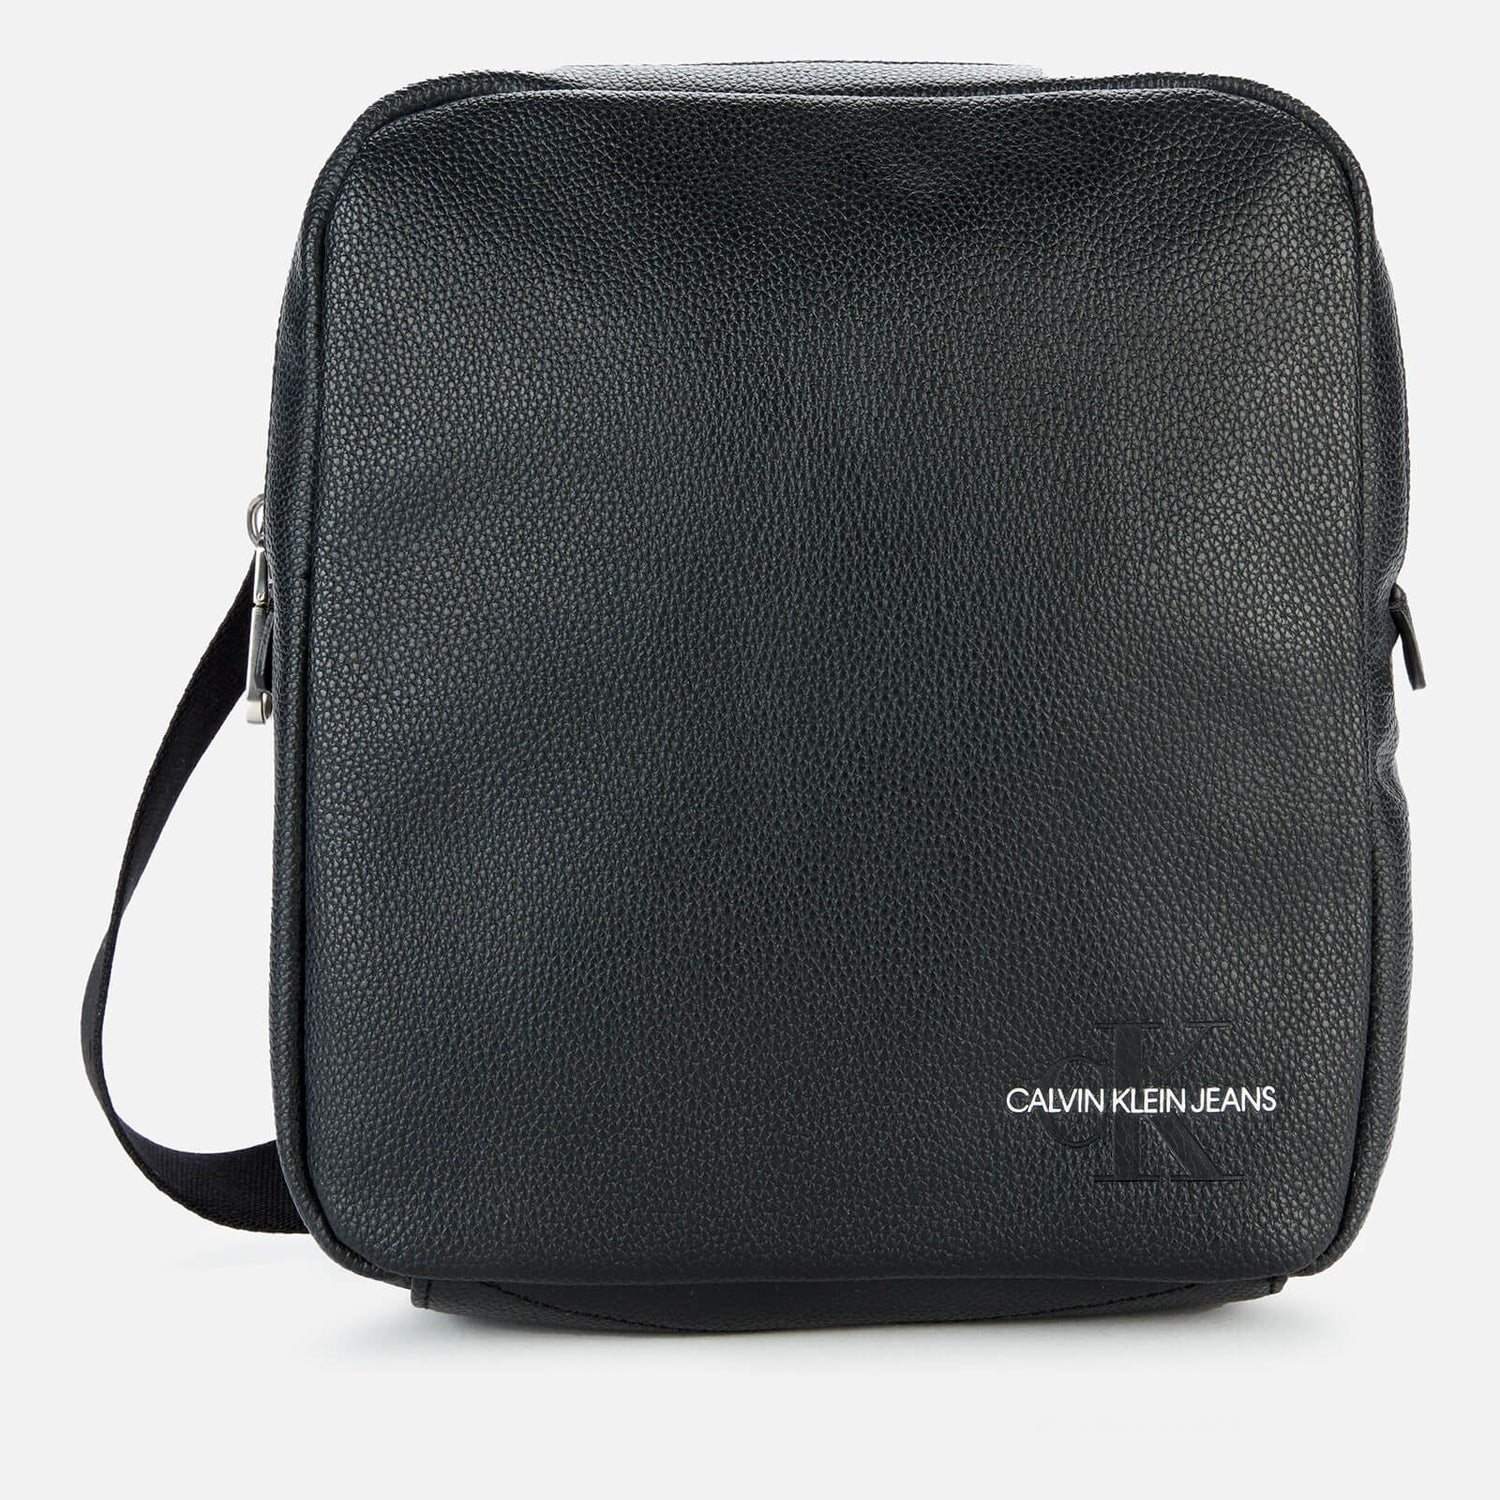 Calvin Klein Jeans Men's Micro Pebble Reporter Bag - Black